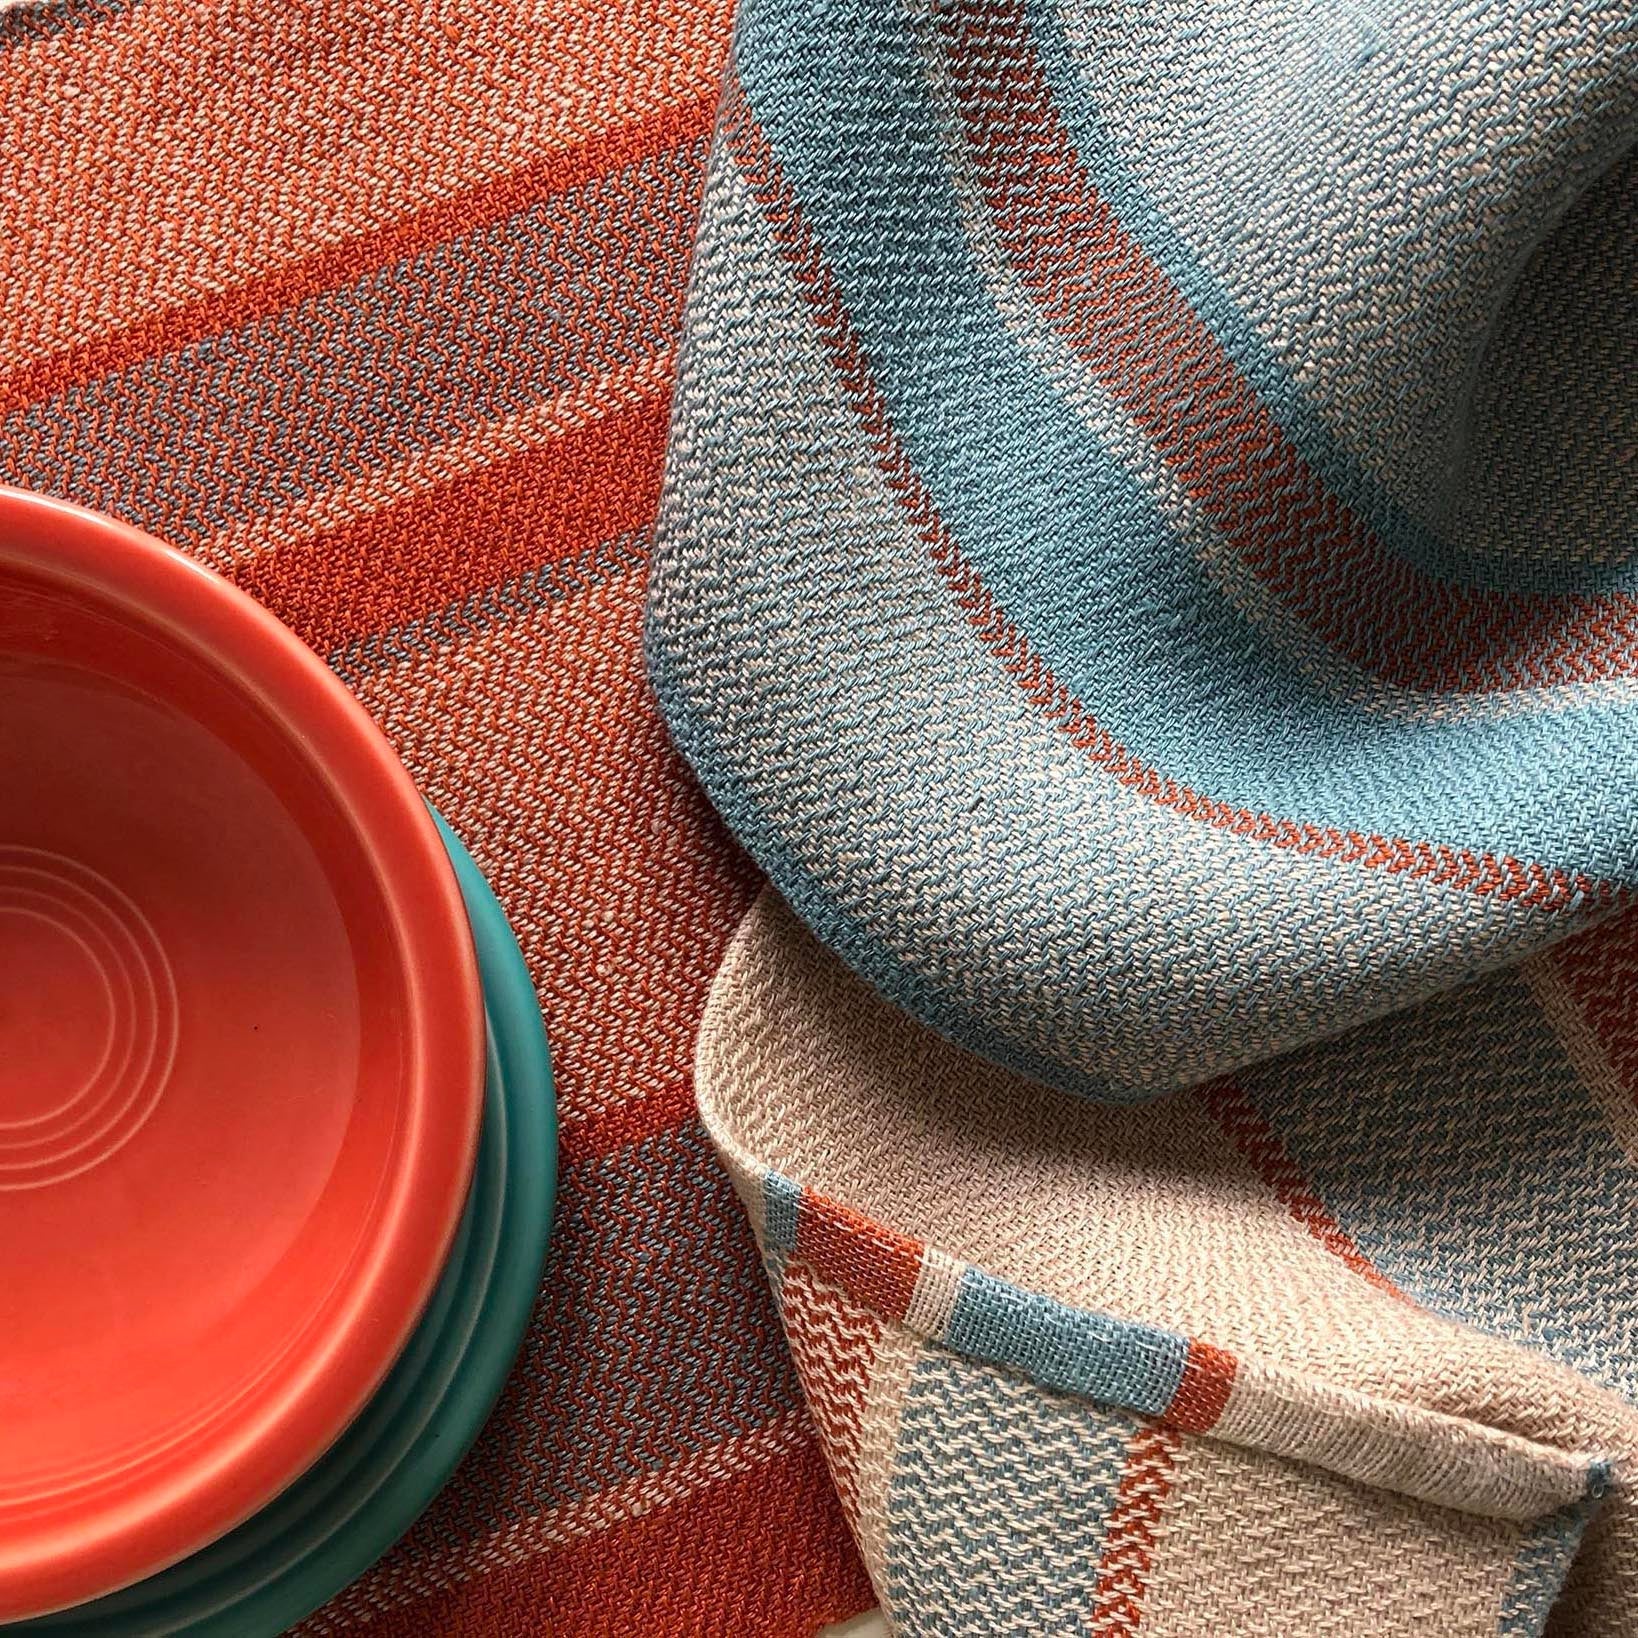 Beginner Cotton Tea Towels - Free PDF Pattern for Weaving - Gist Yarn